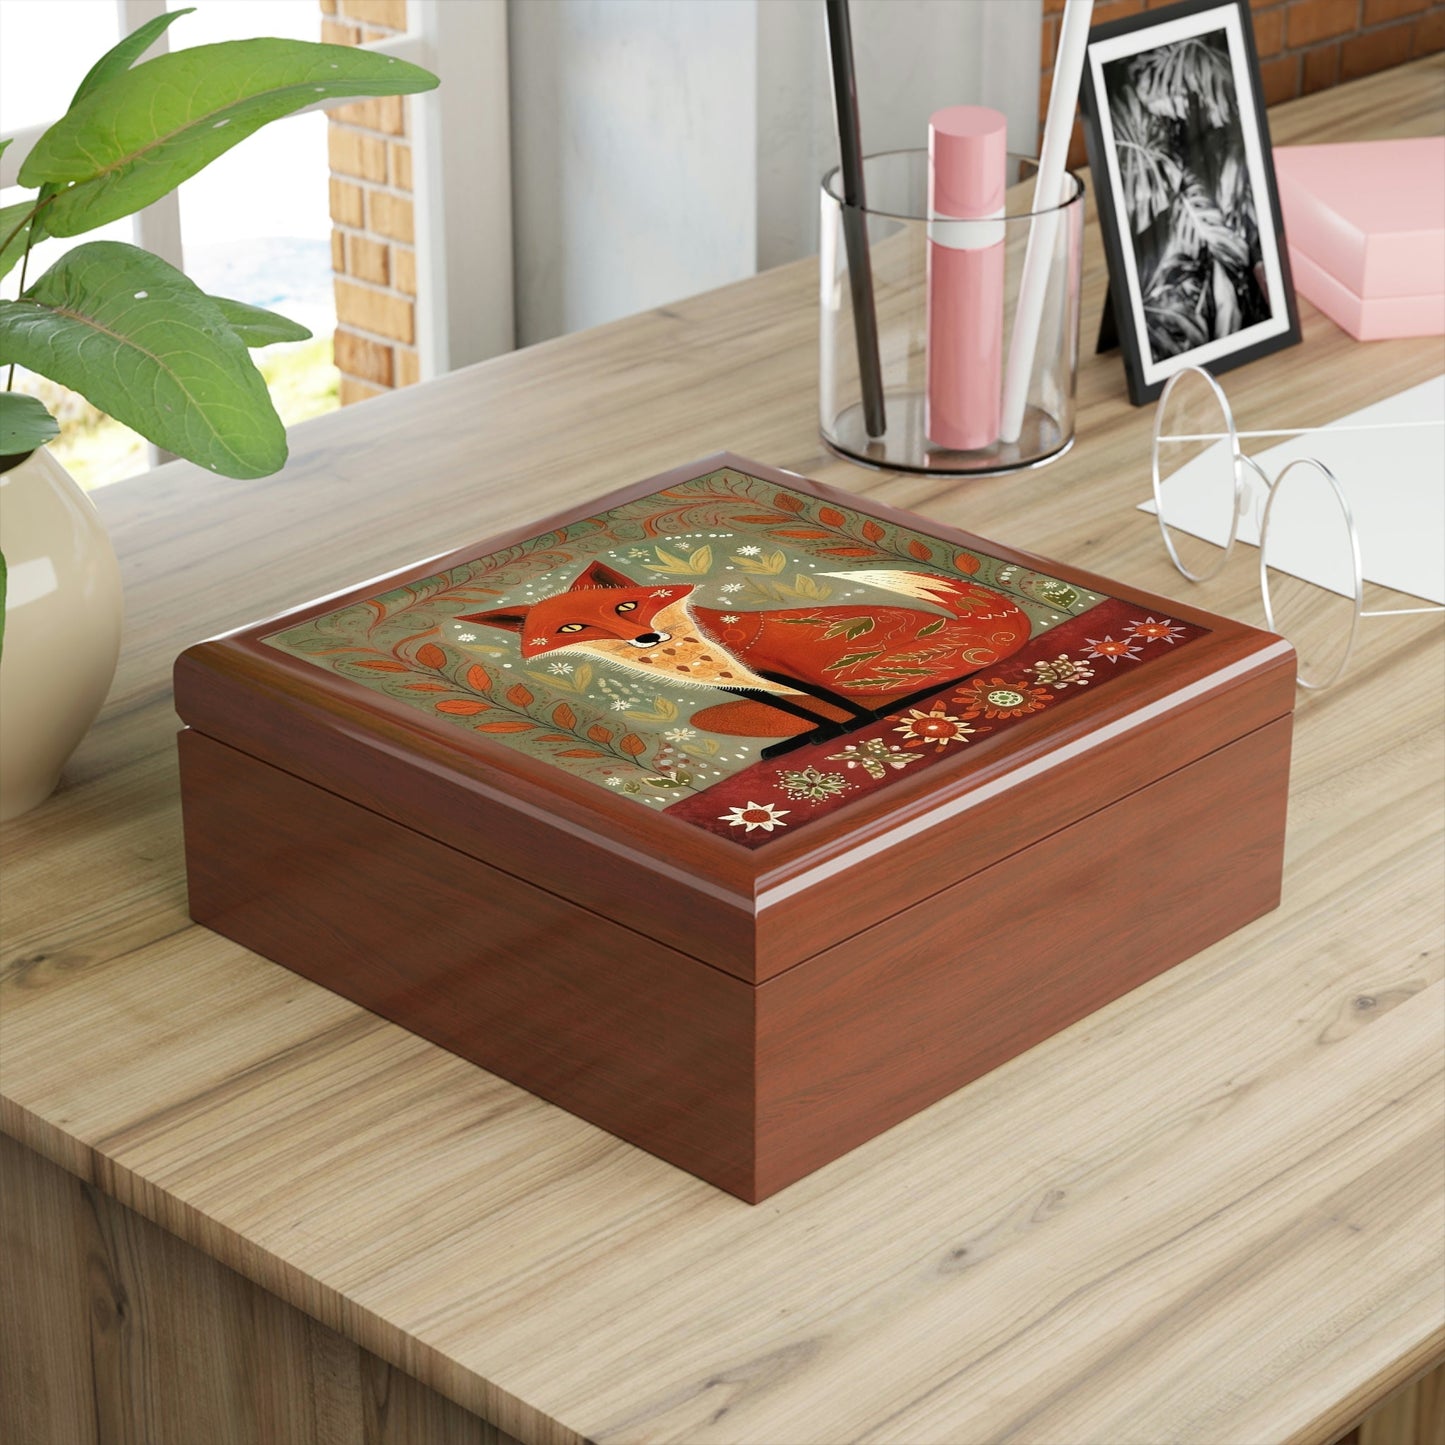 Rustic Folk Art Red Fox Design Wooden Keepsake Jewelry Box